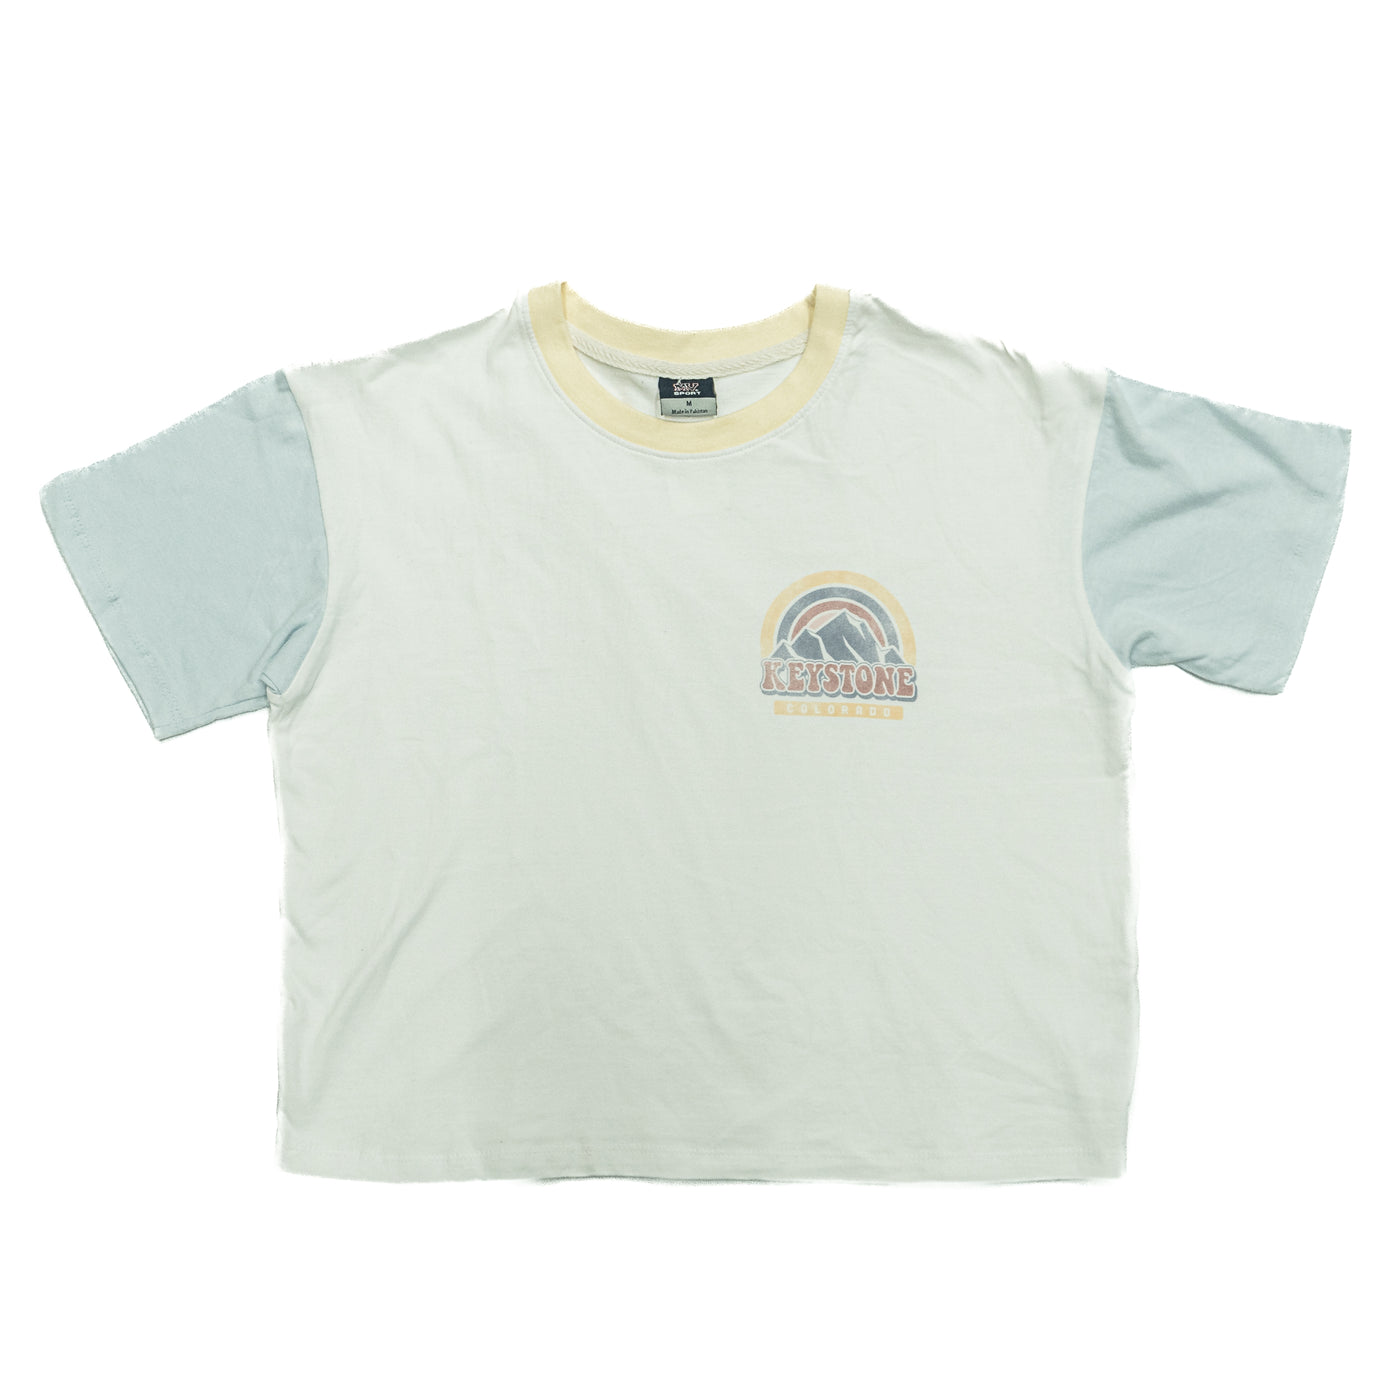 Keystone Colorblock Short Sleeve Shirt